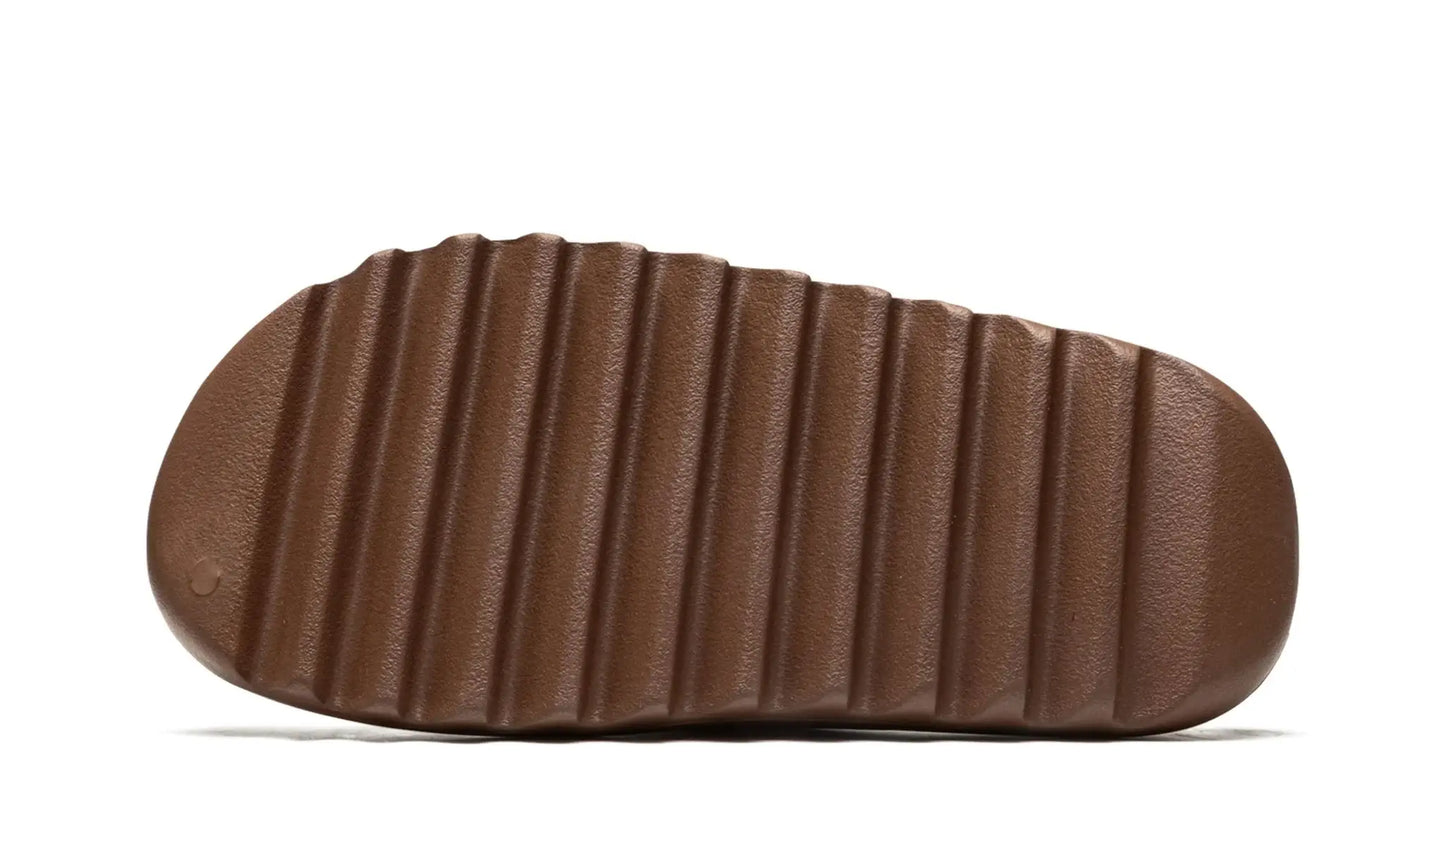 Adidas Yeezy Slide "Flax" Marrom